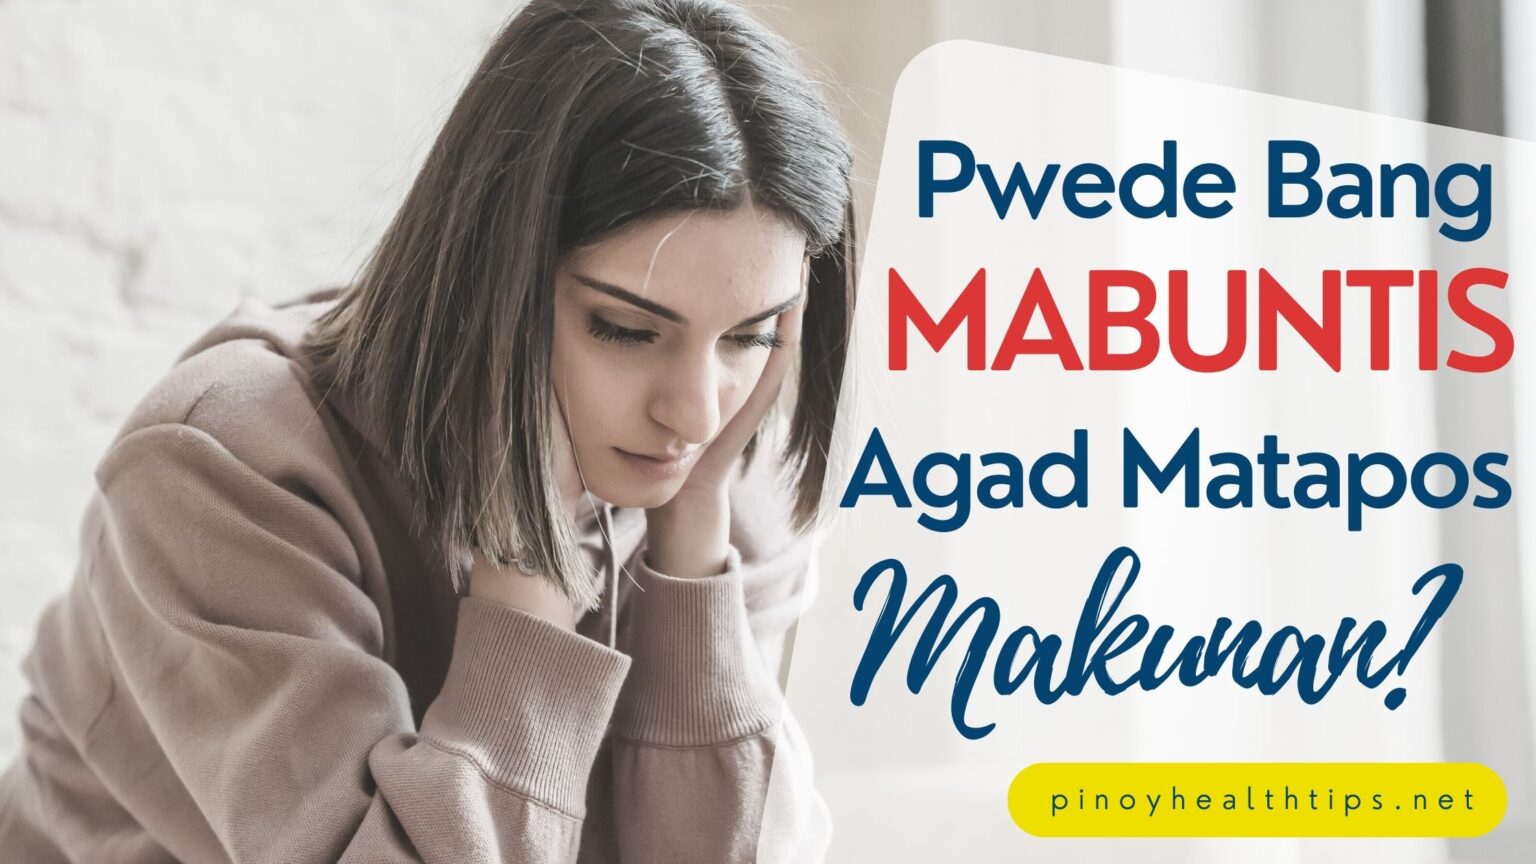 Pwede Bang Mabuntis Agad Matapos Makunan? - Pinoy Health Tips